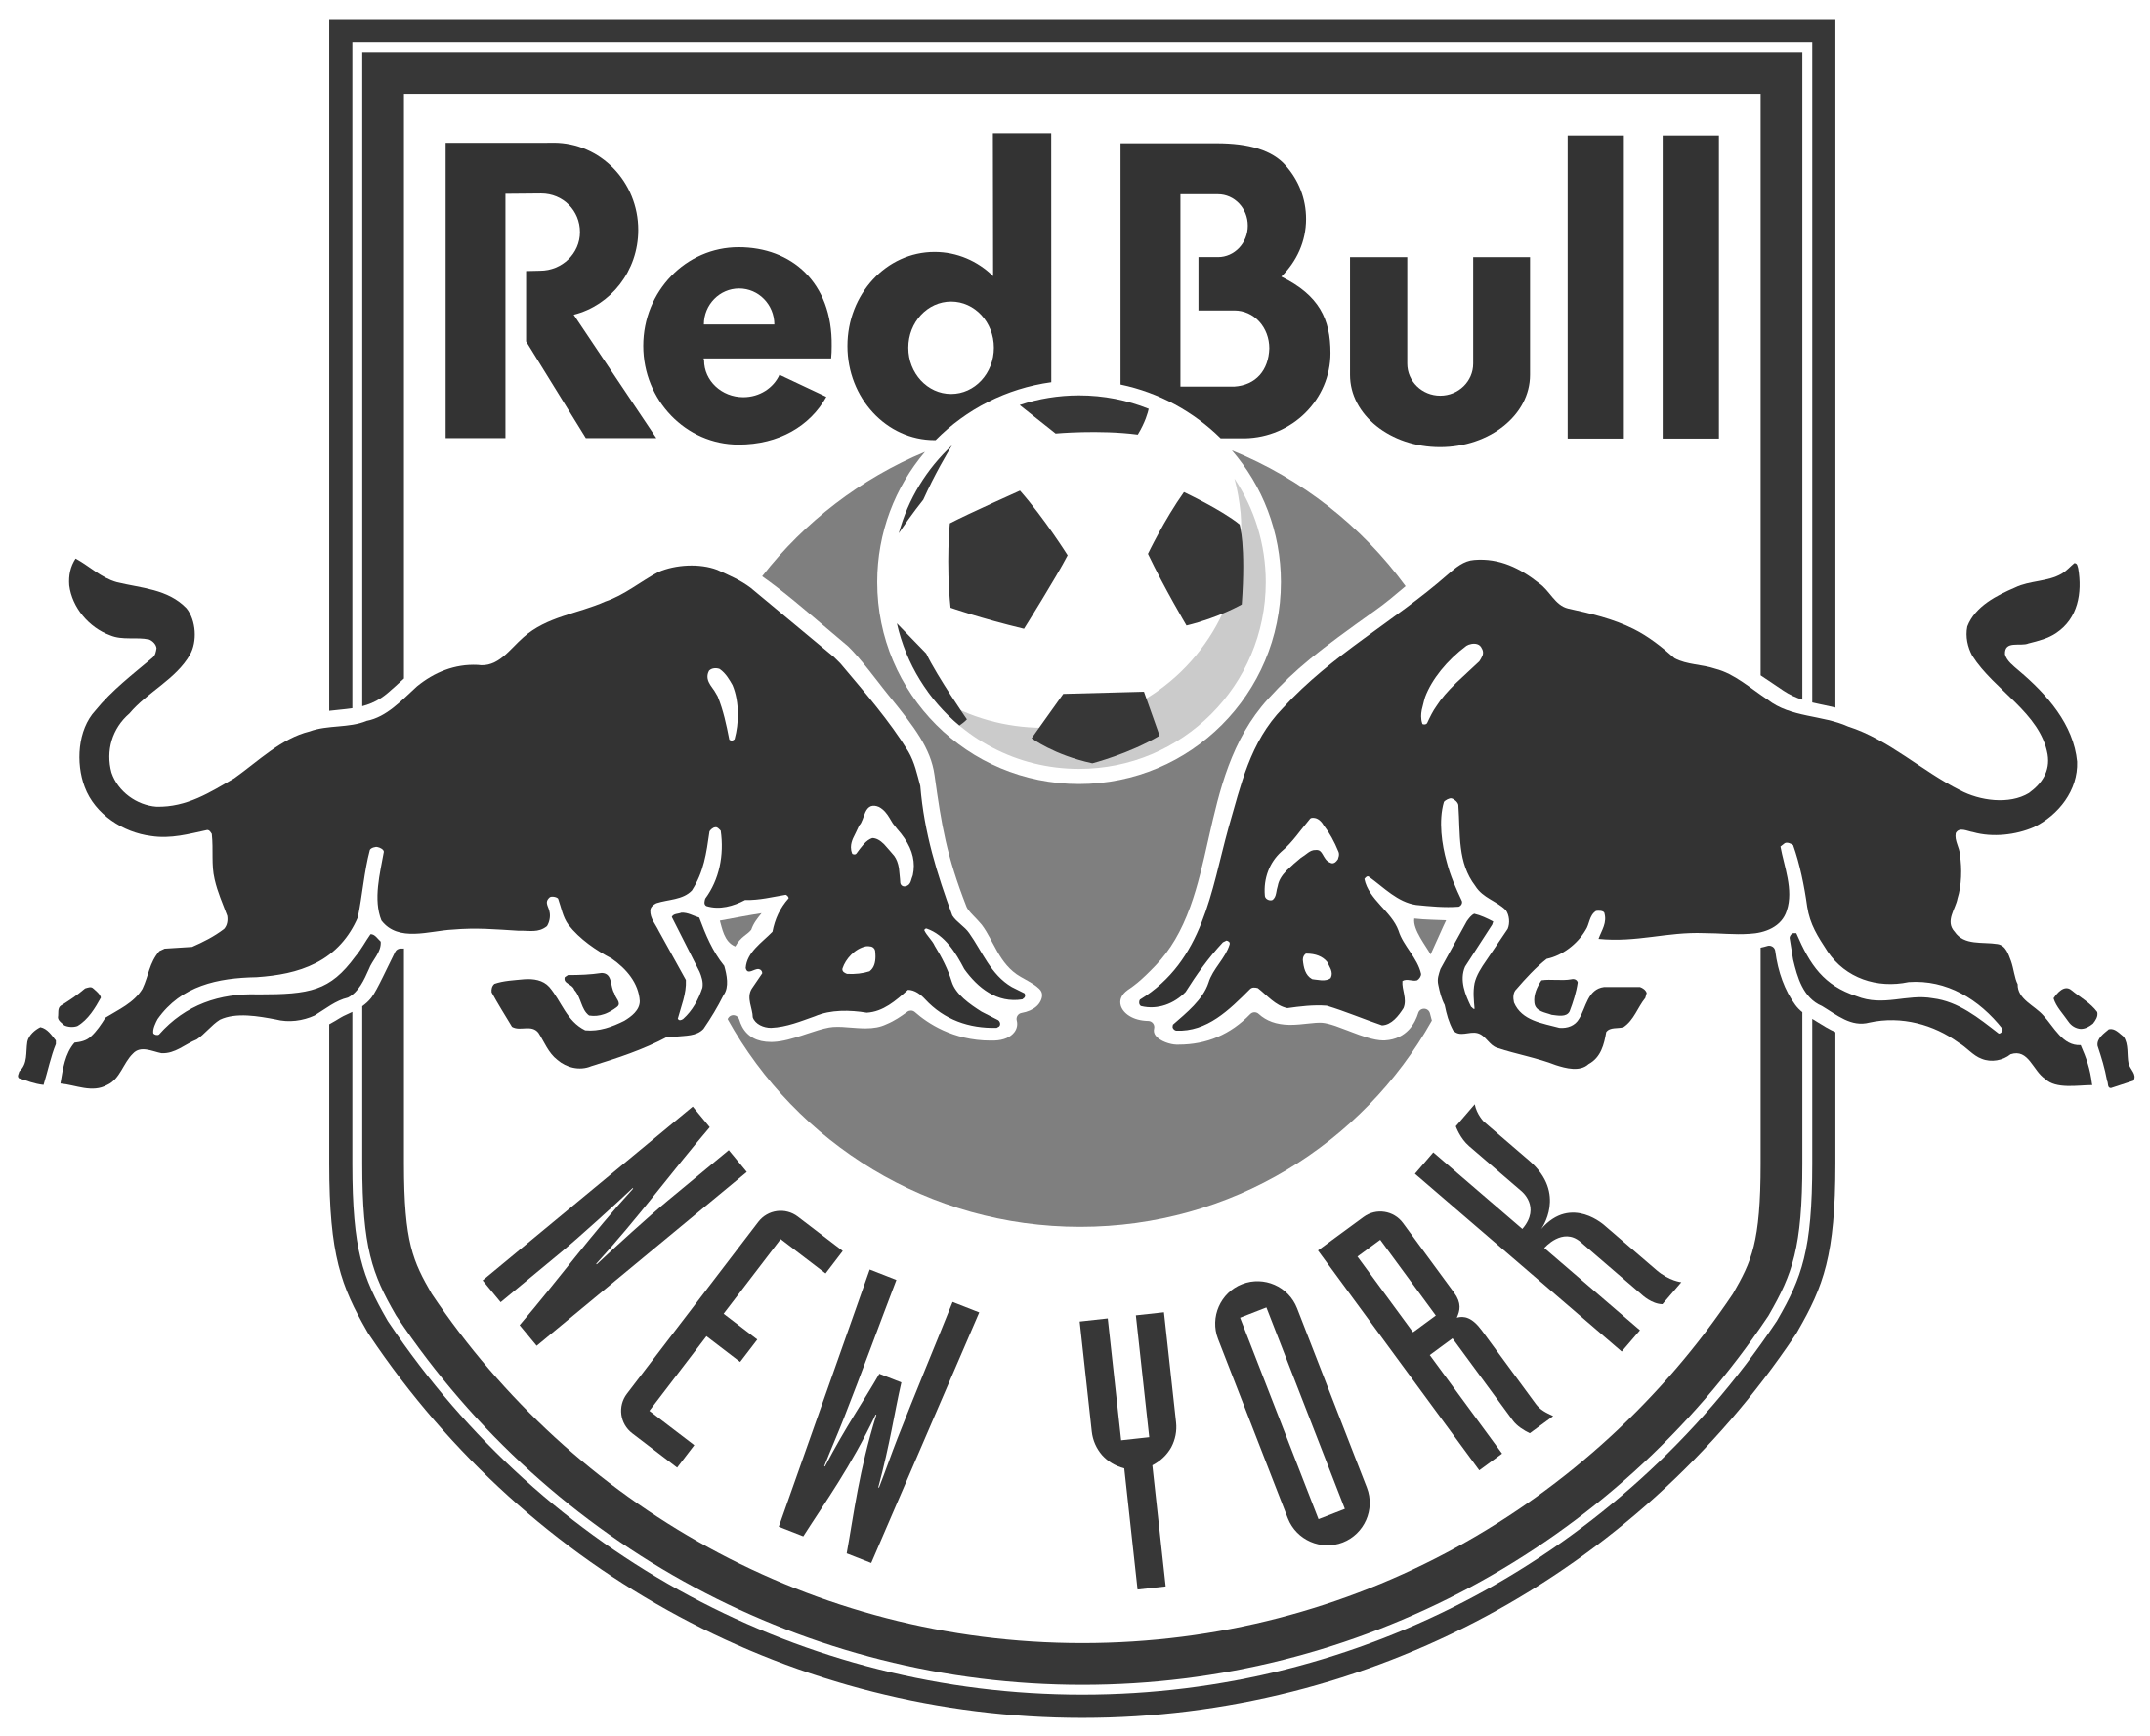 Download New York Red Bulls Logo Black And White New York Red Bulls Png Png Image With No Background Pngkey Com